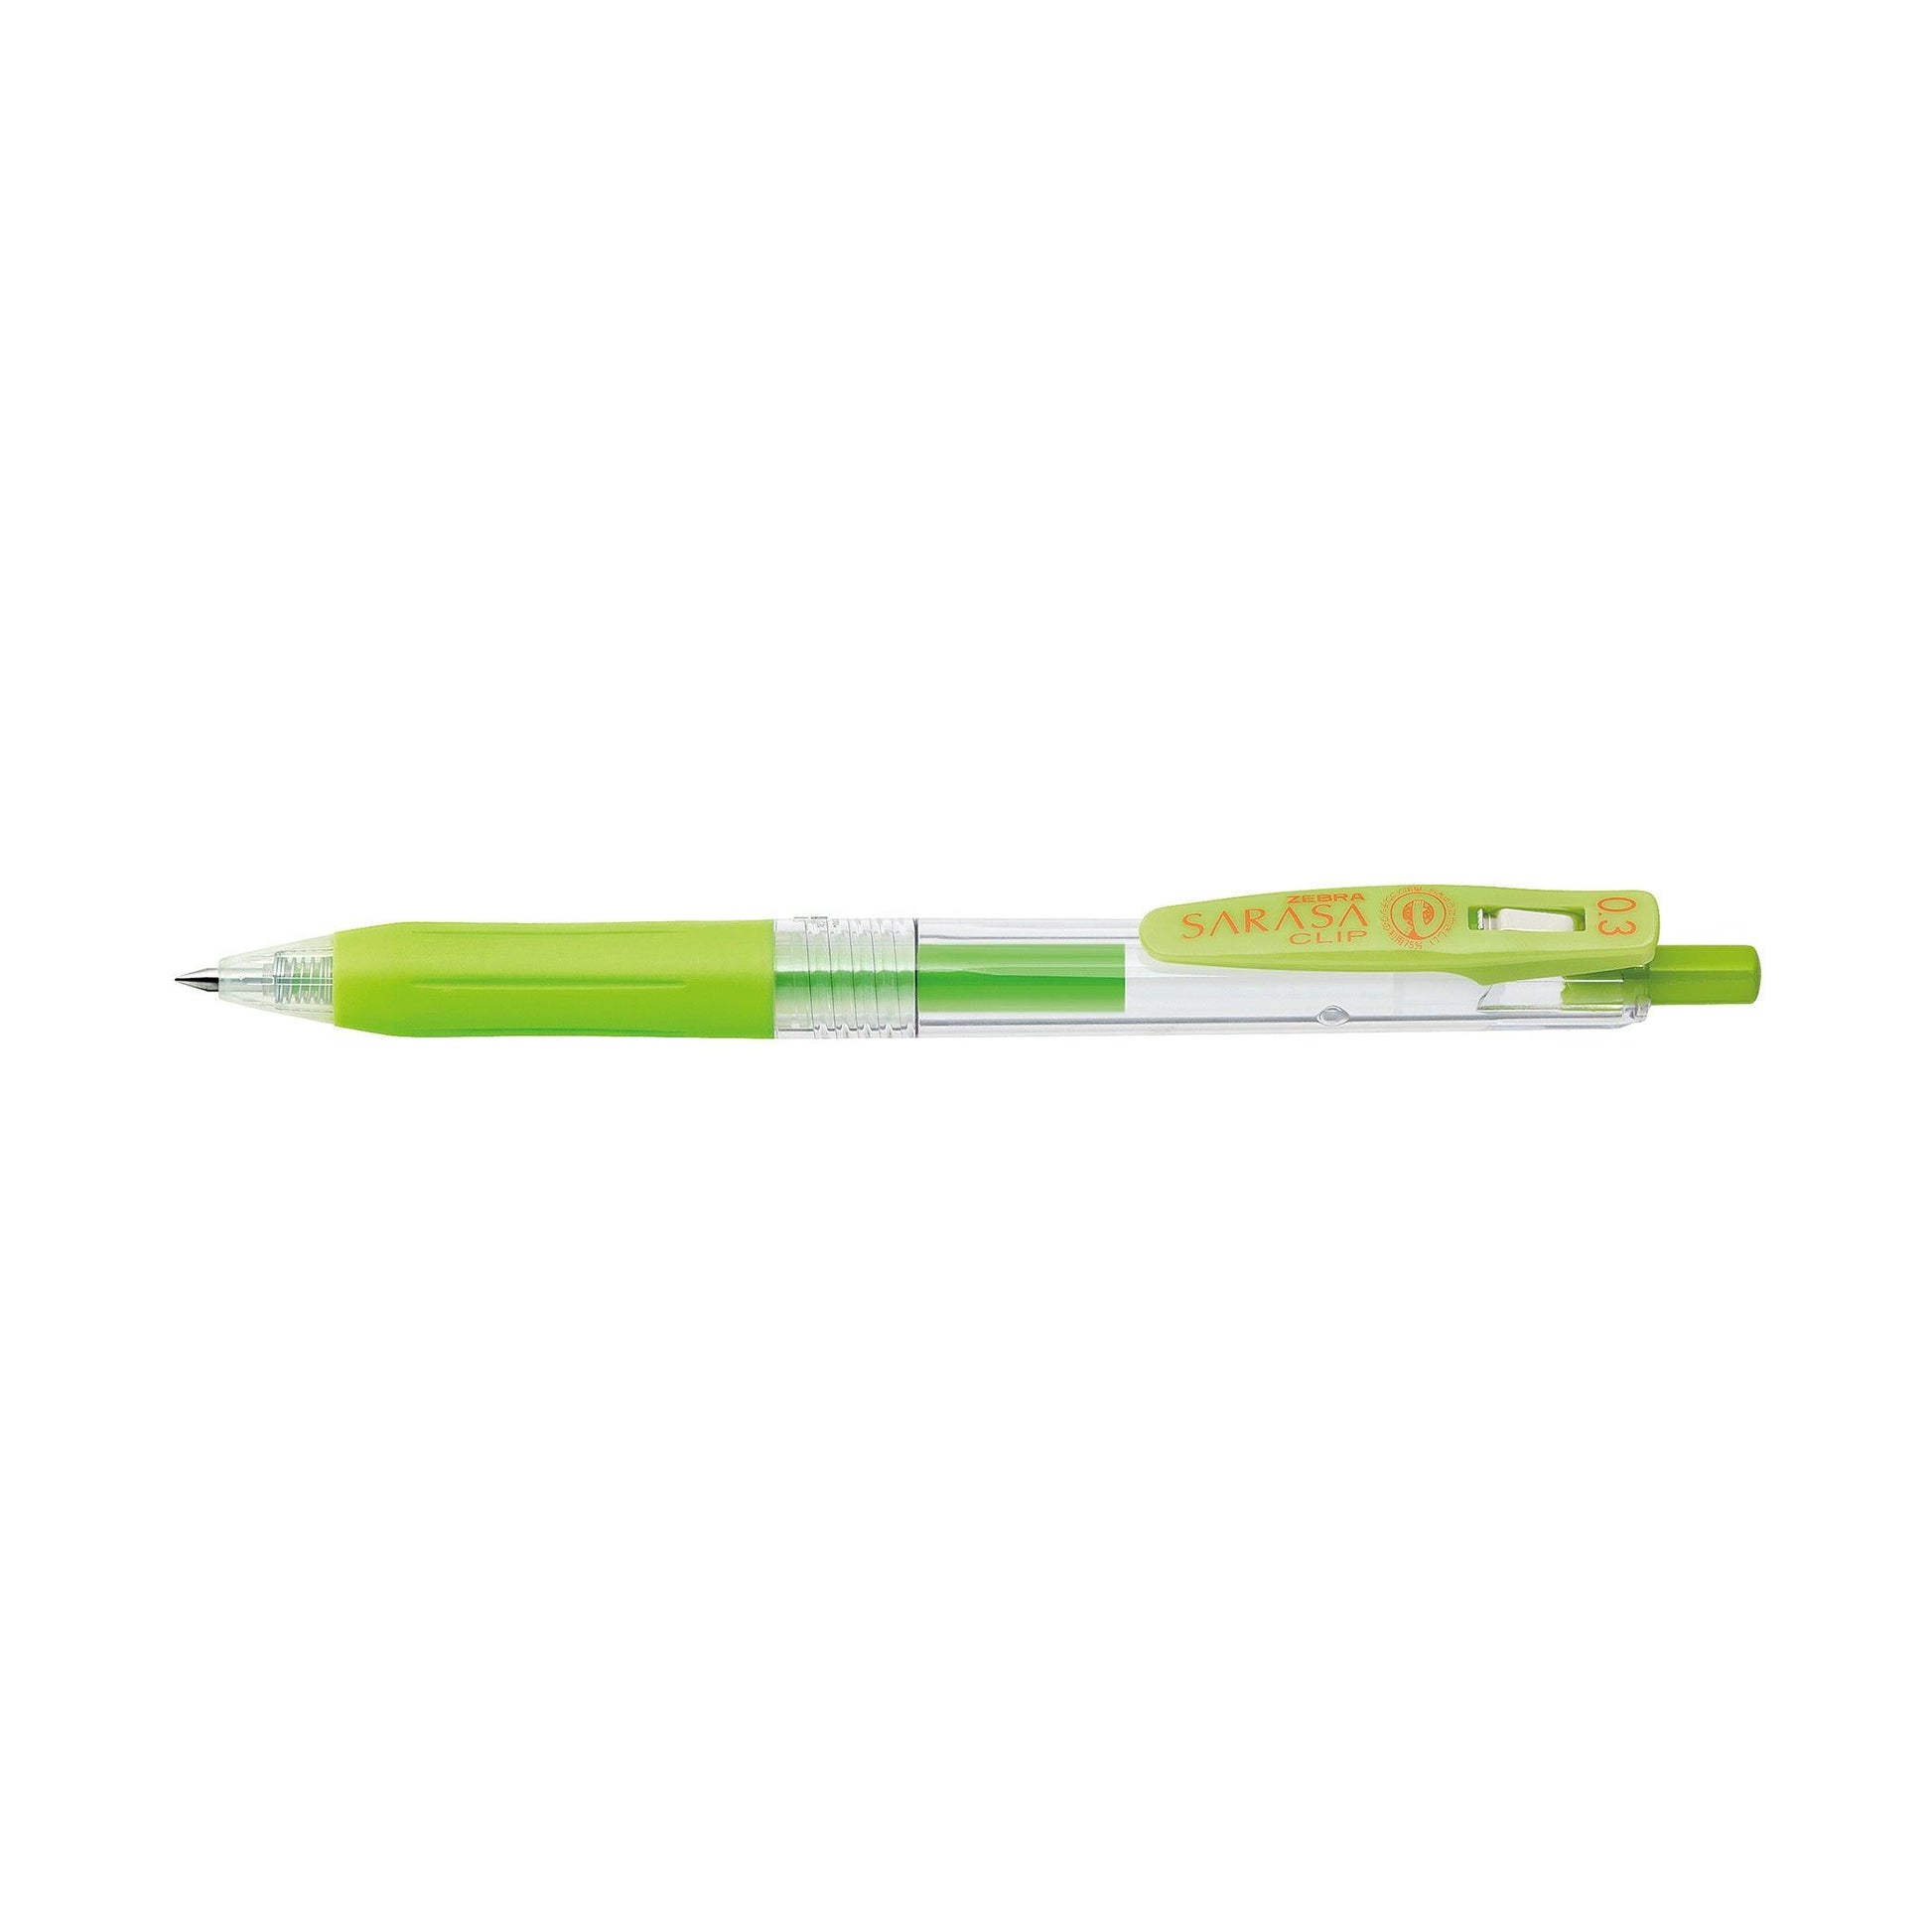 Gel pen ZEBRA SARASA CLIP JJH15 0.3mm recycled material multicolor - CHL-STORE 